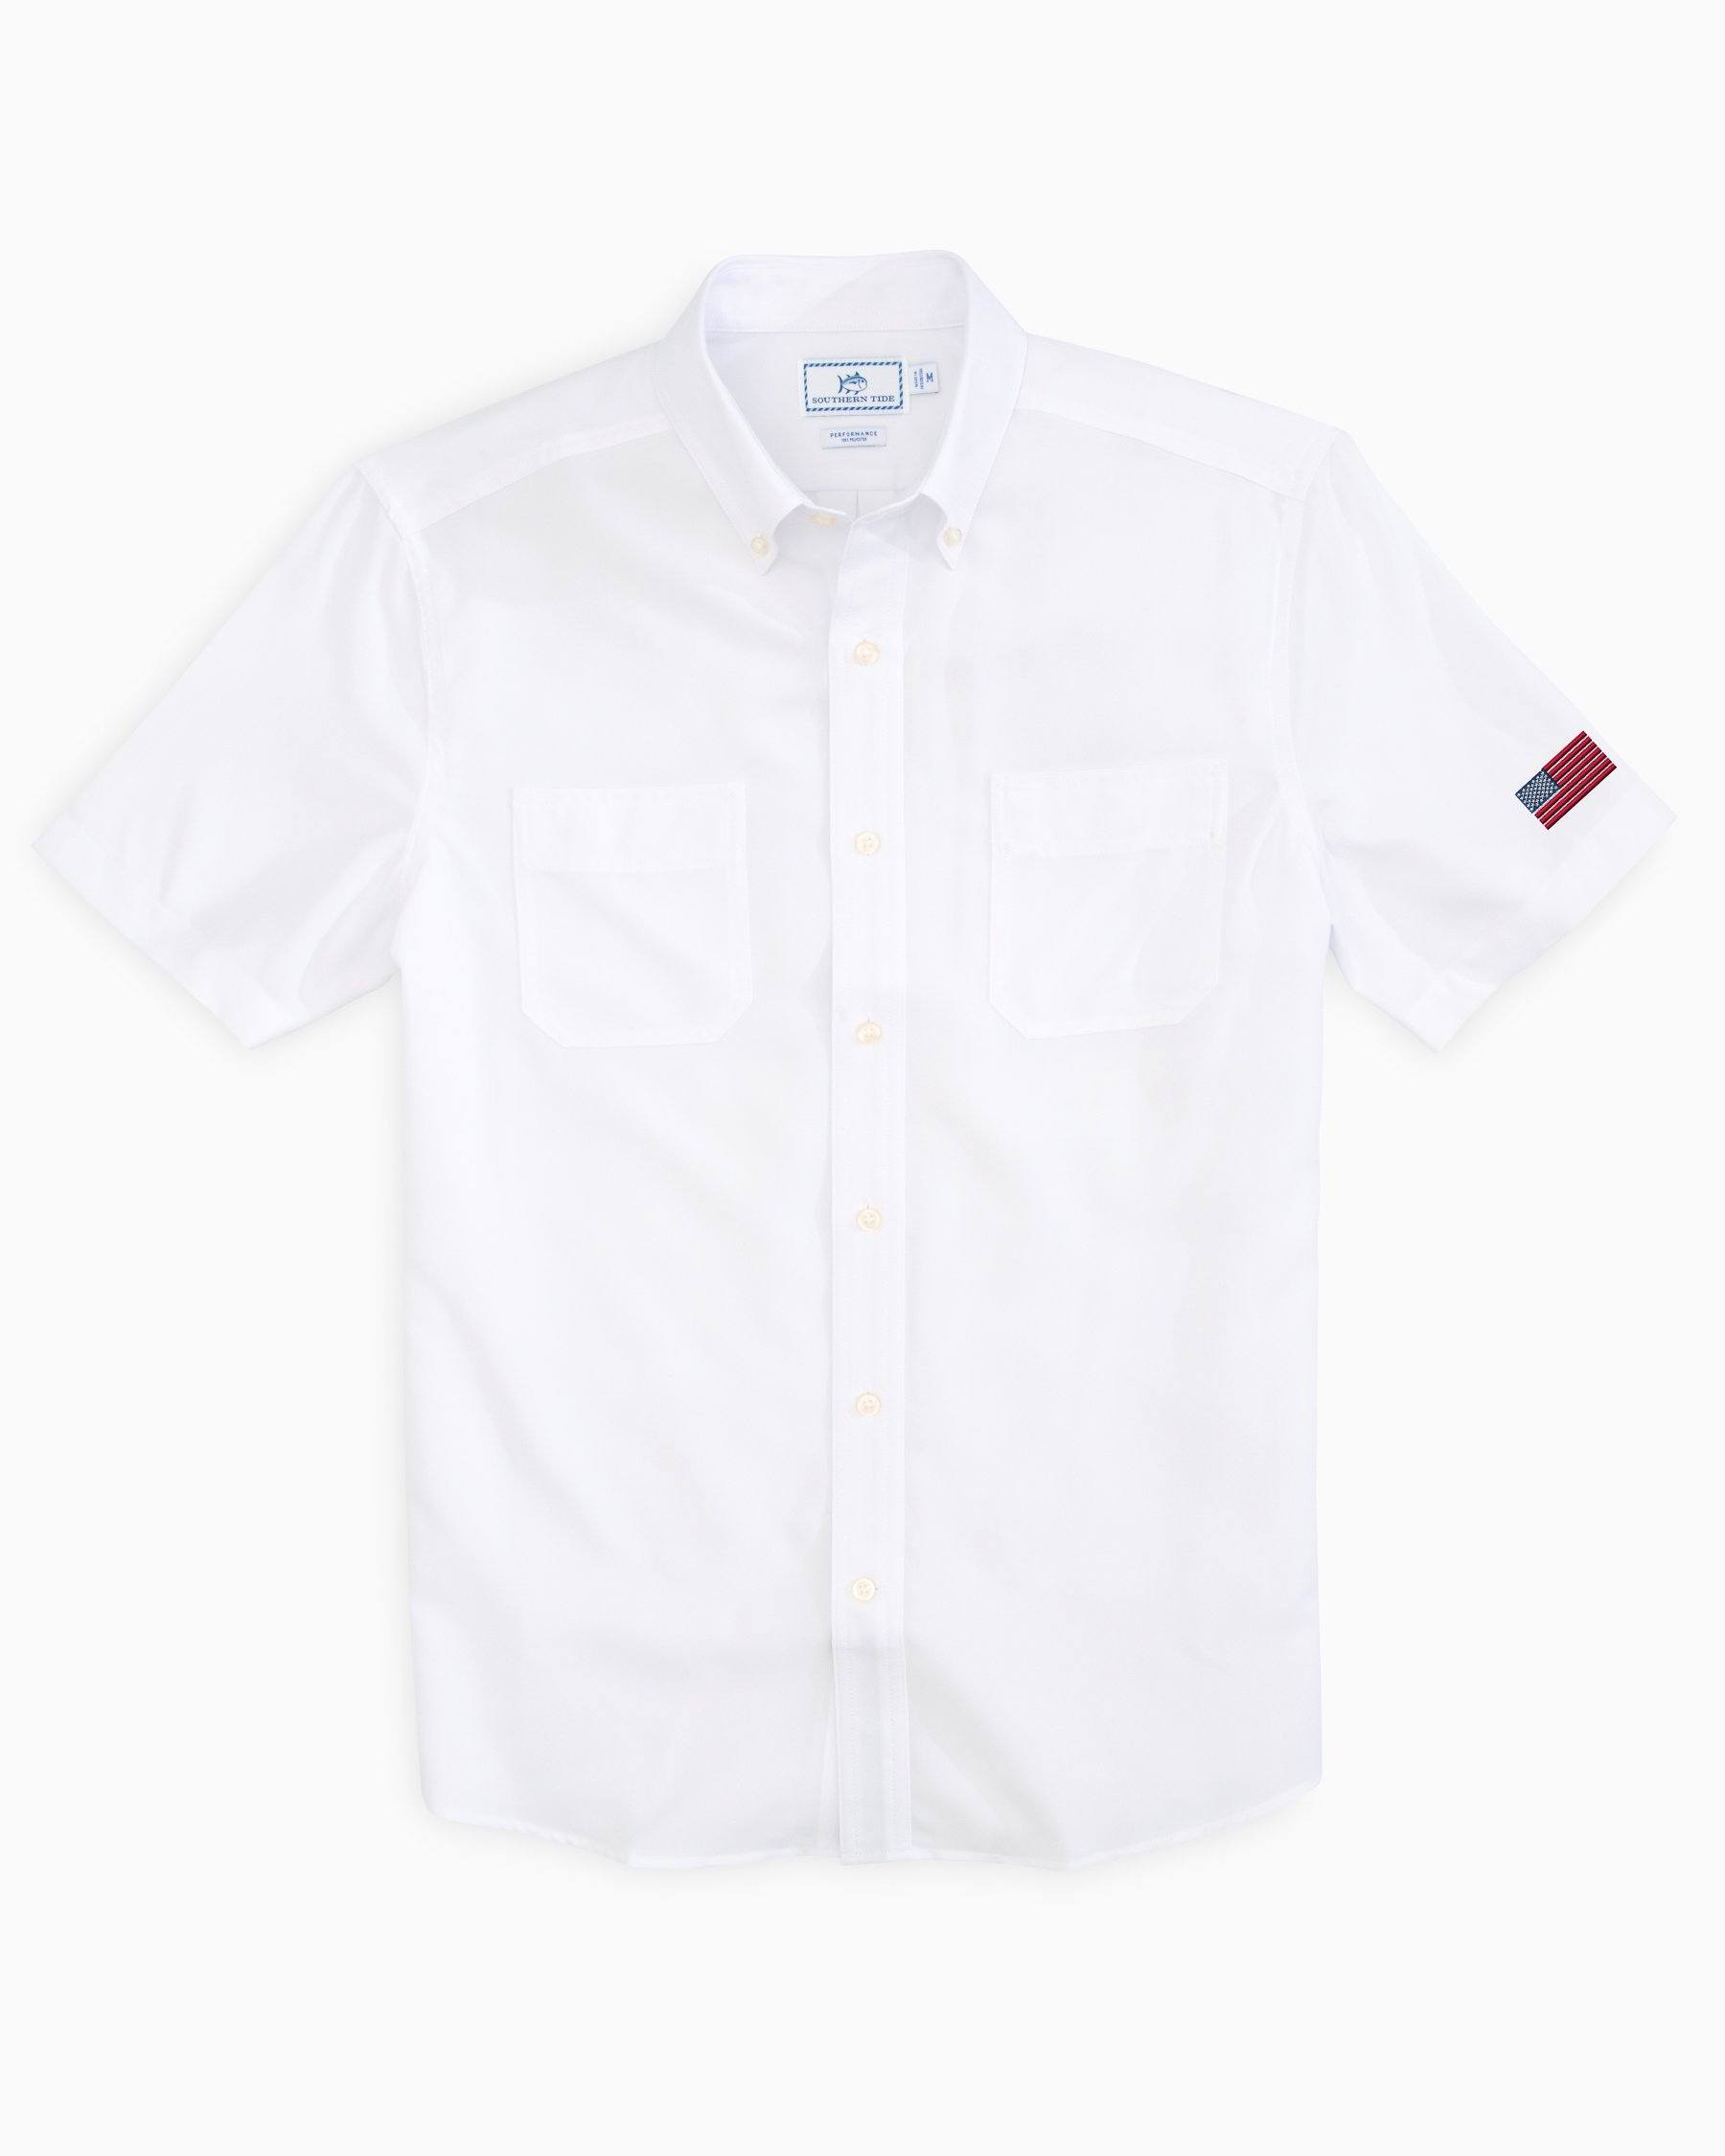 USA Short Sleeve Performance Dock Shirt